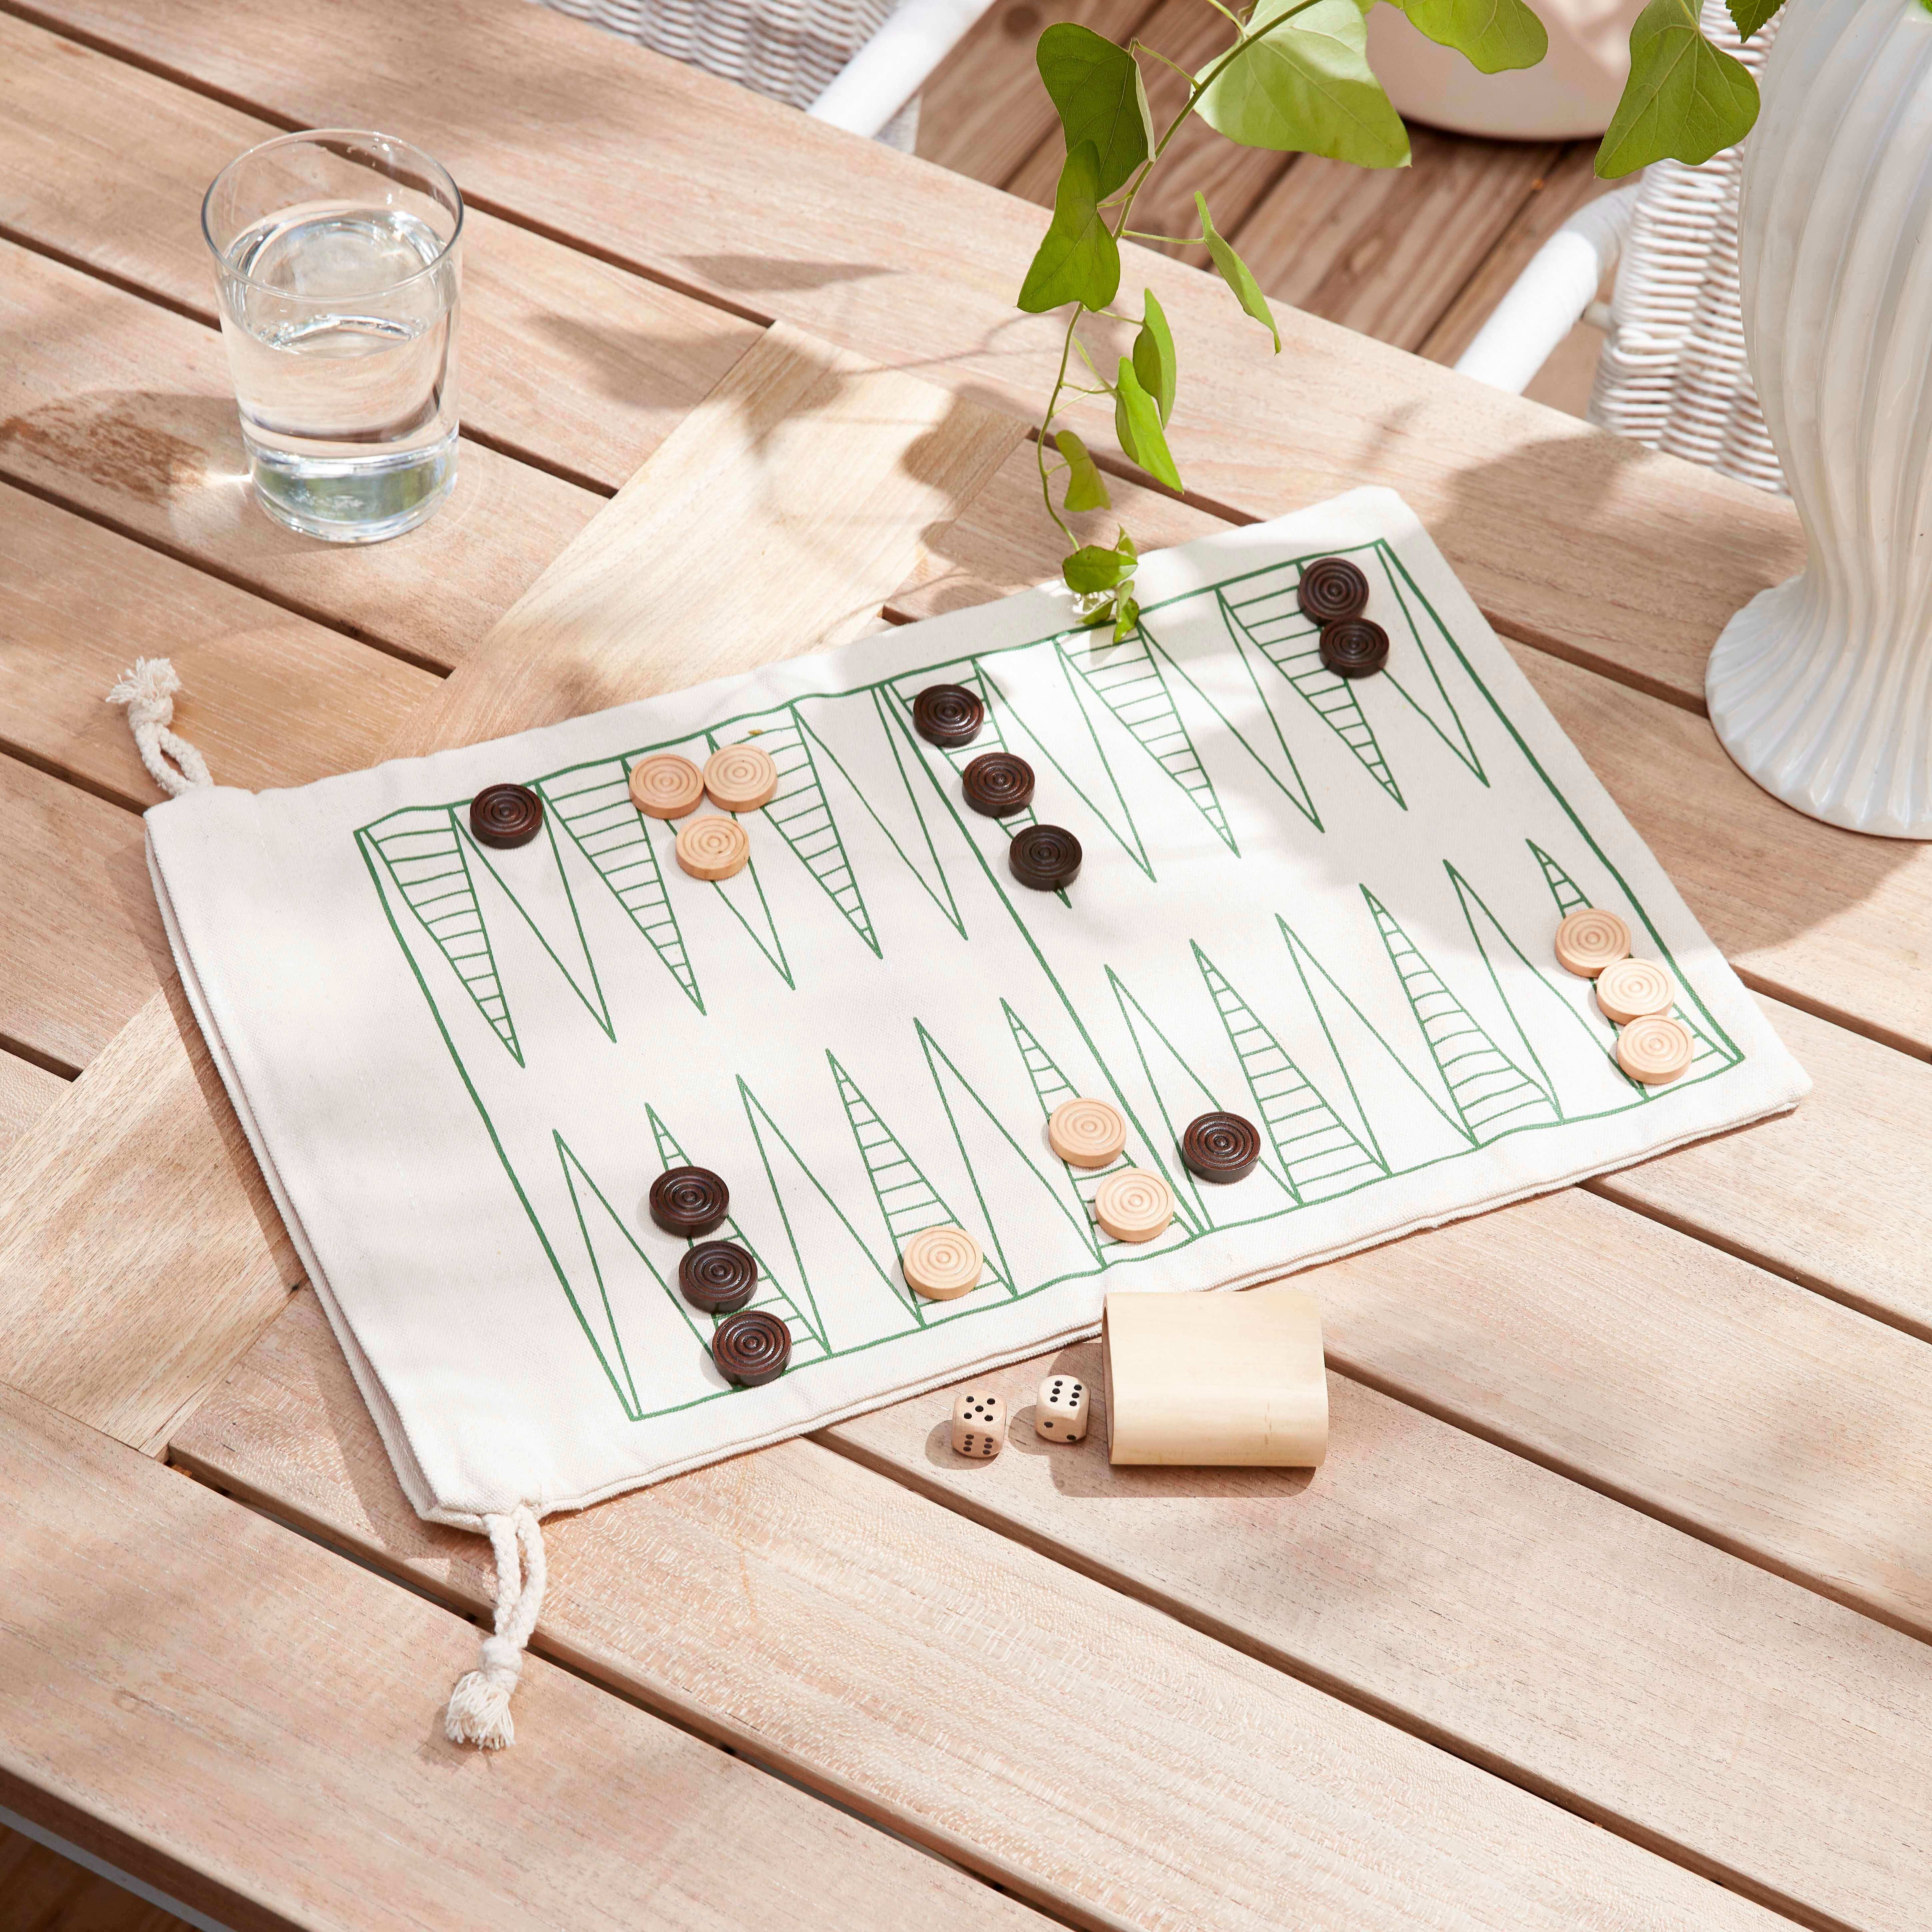 Backgammon Board Game